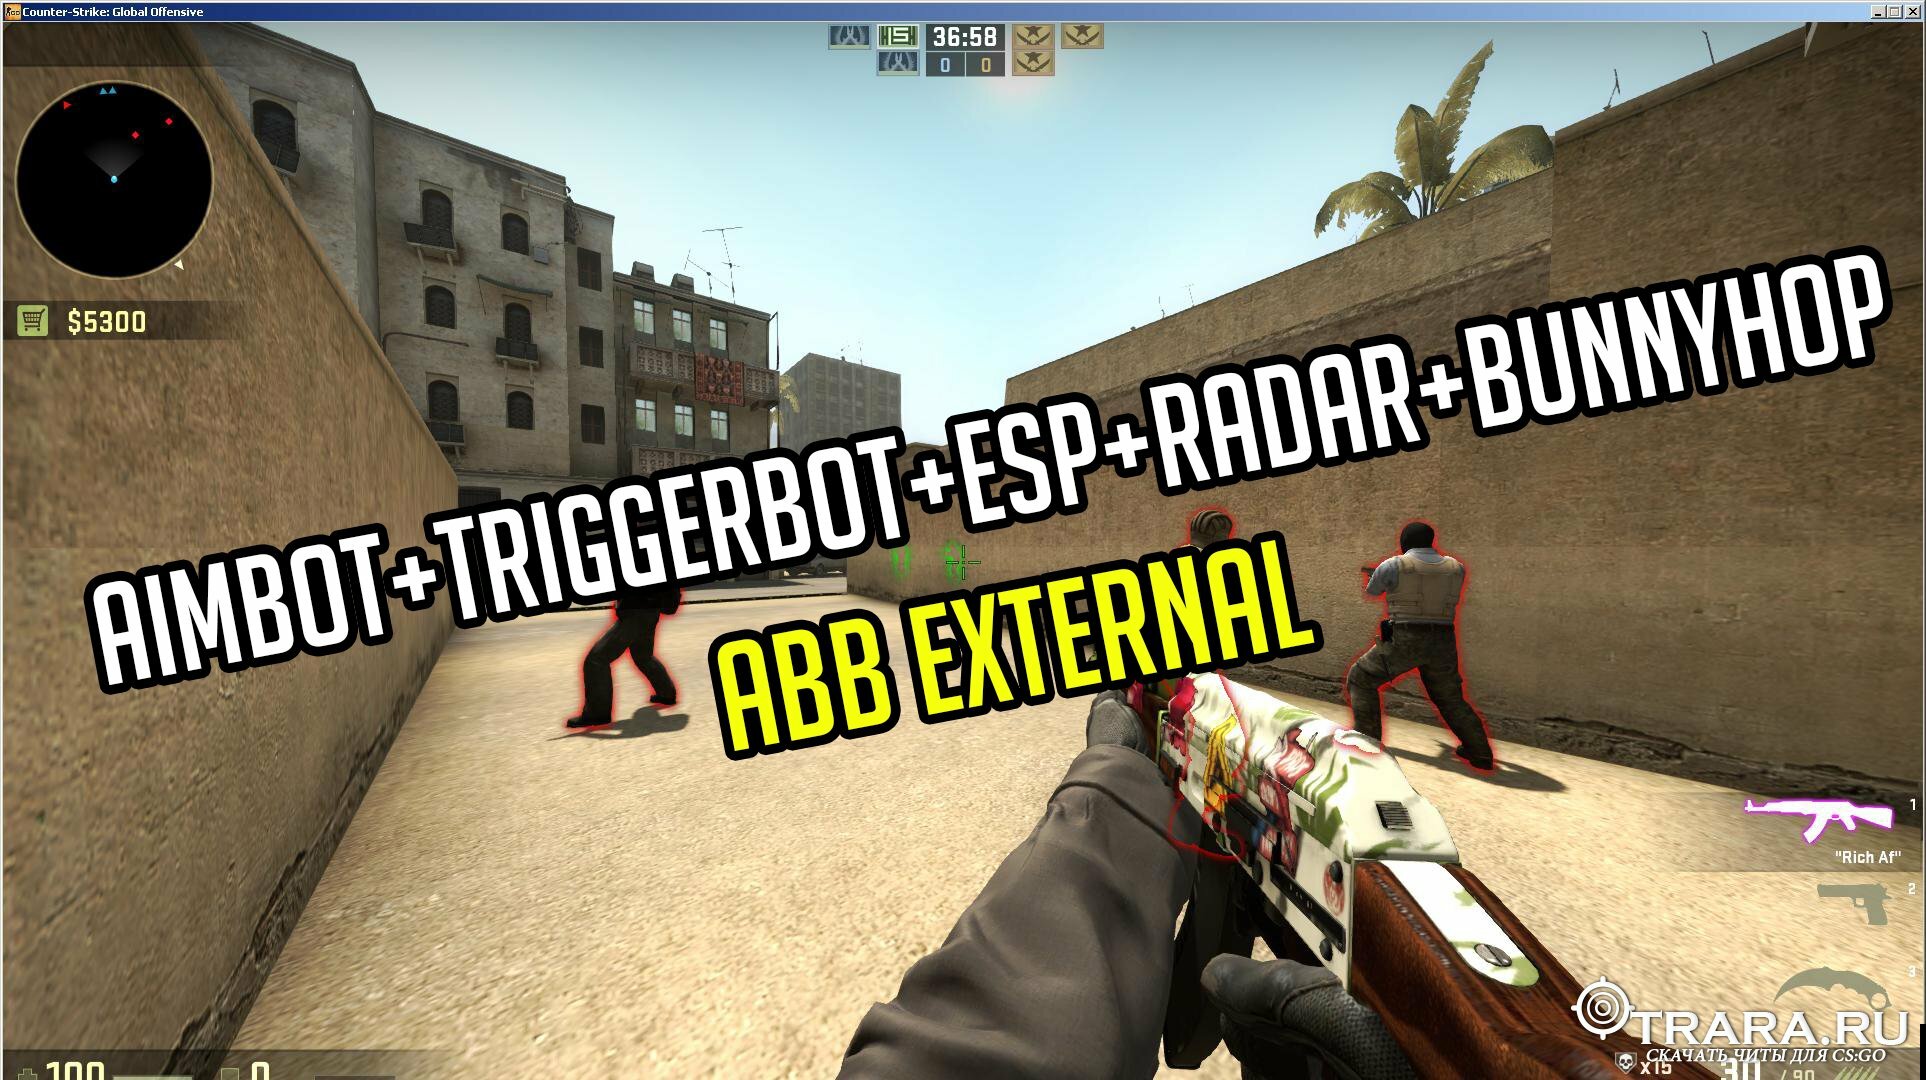   CS:GO Aimbot+TriggerBot+ESP+Radar+BunnyHop (Abb External)